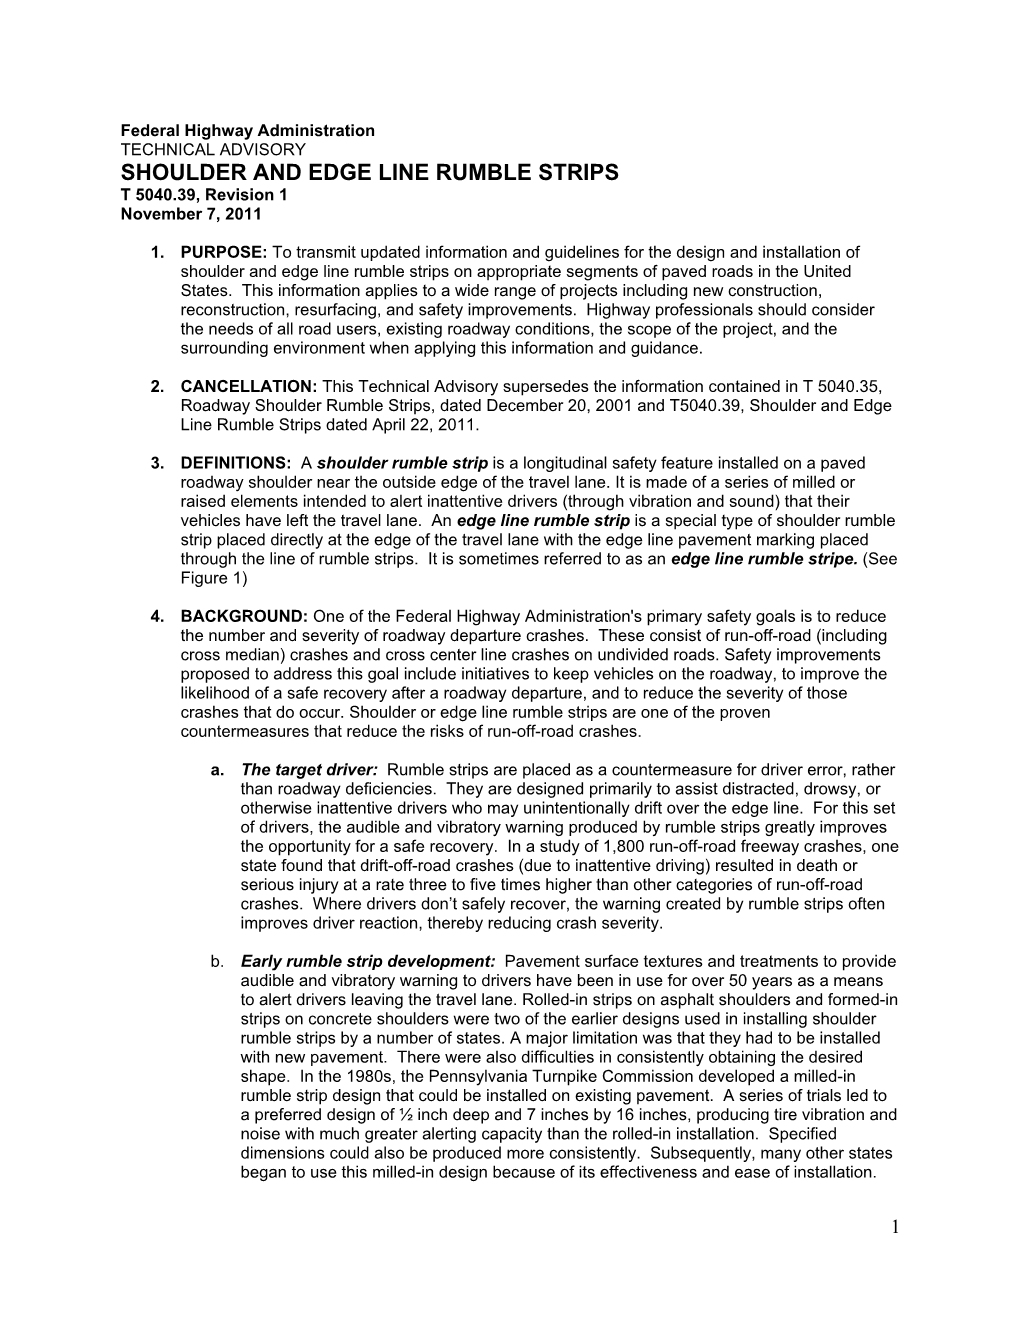 SHOULDER and EDGE LINE RUMBLE STRIPS T 5040.39, Revision 1 November 7, 2011